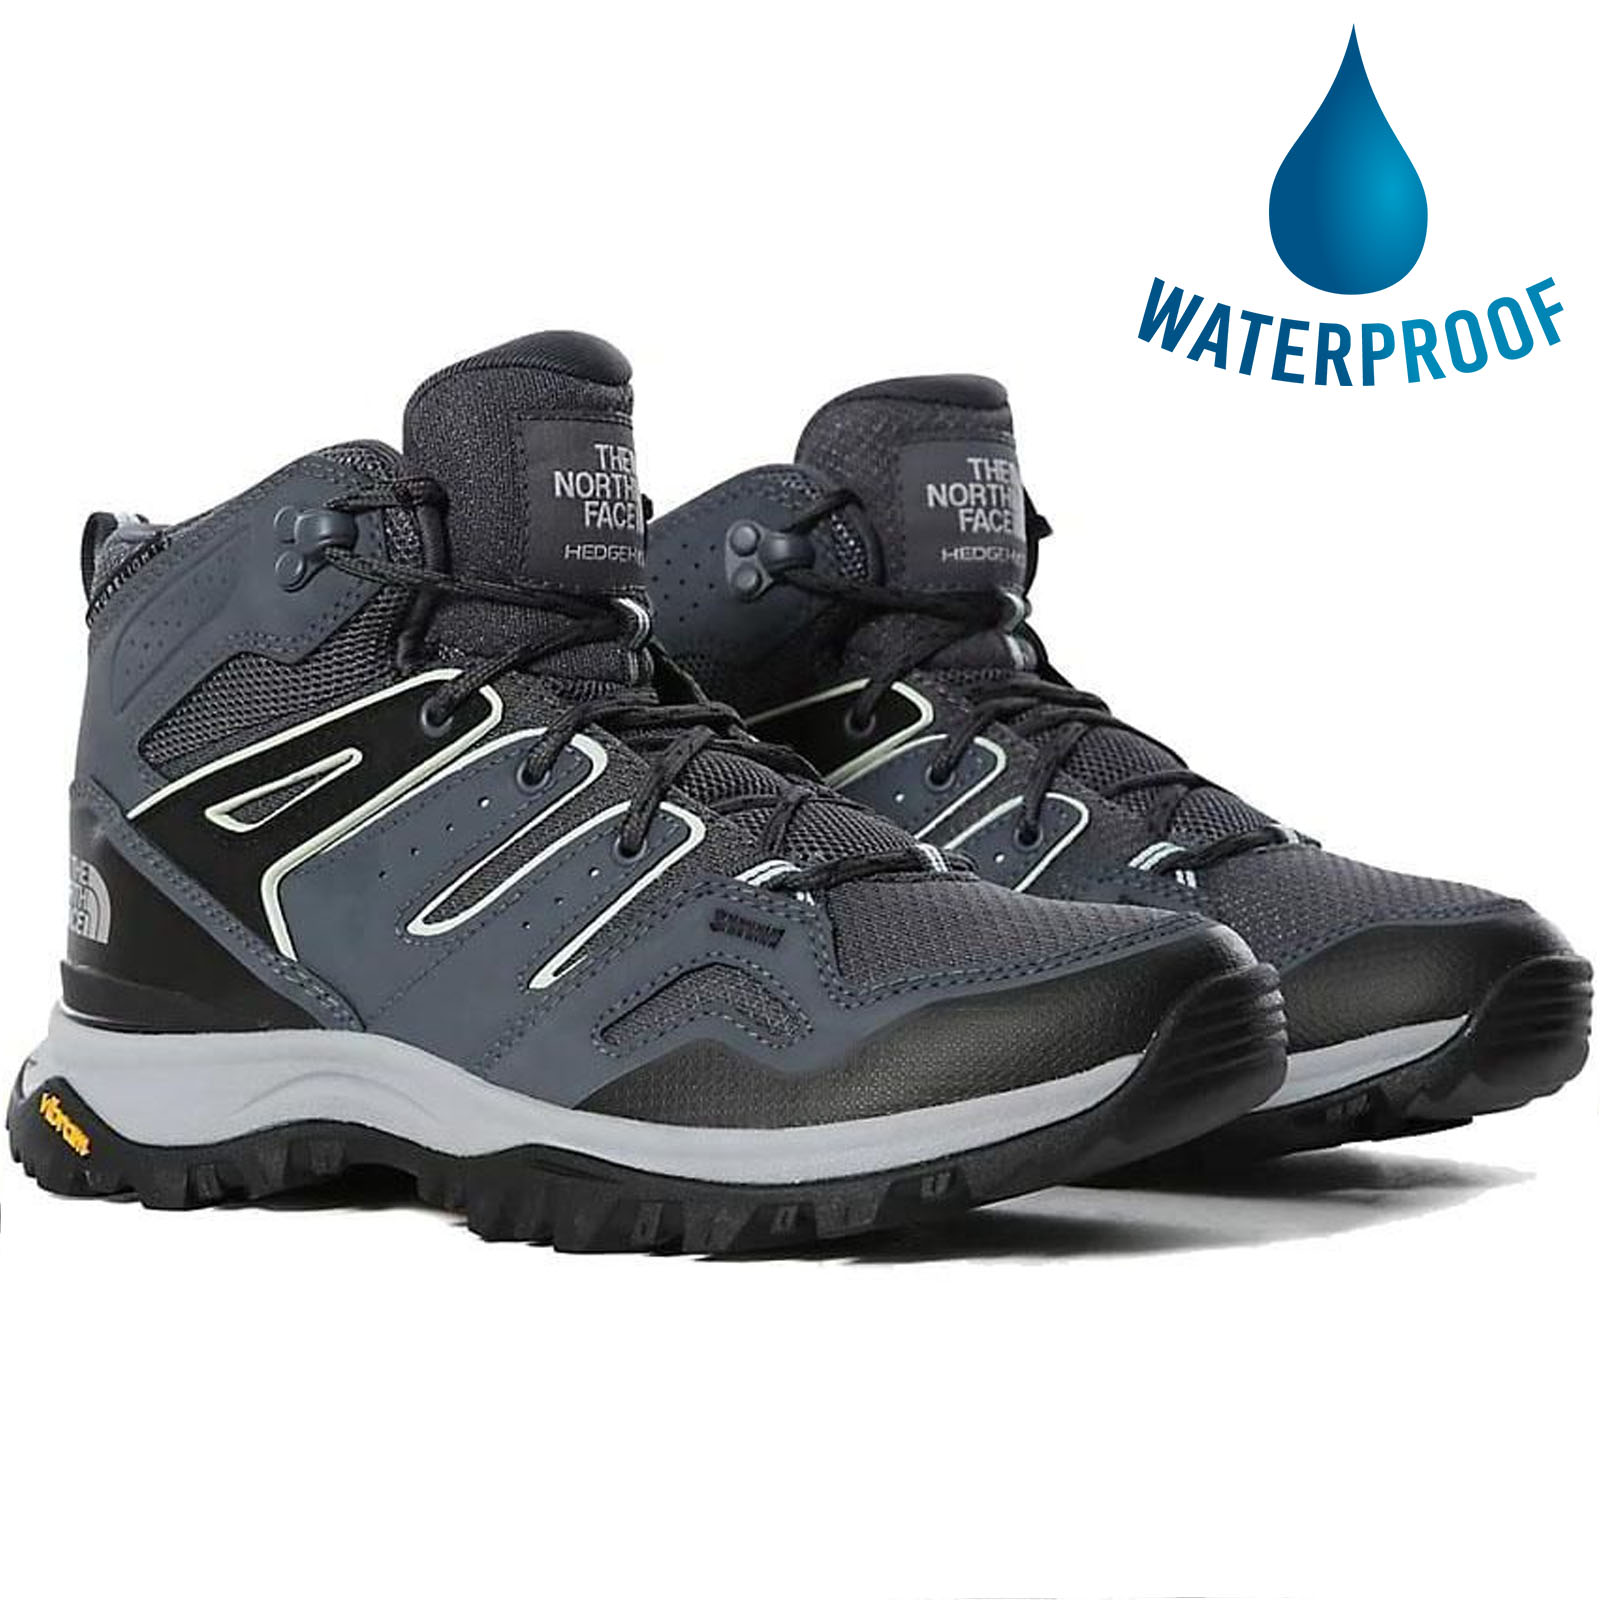 The North Face Womens Hedgehog Futurelight Mid Waterproof Walking Boots - Vanadis Grey TNF Black 2951